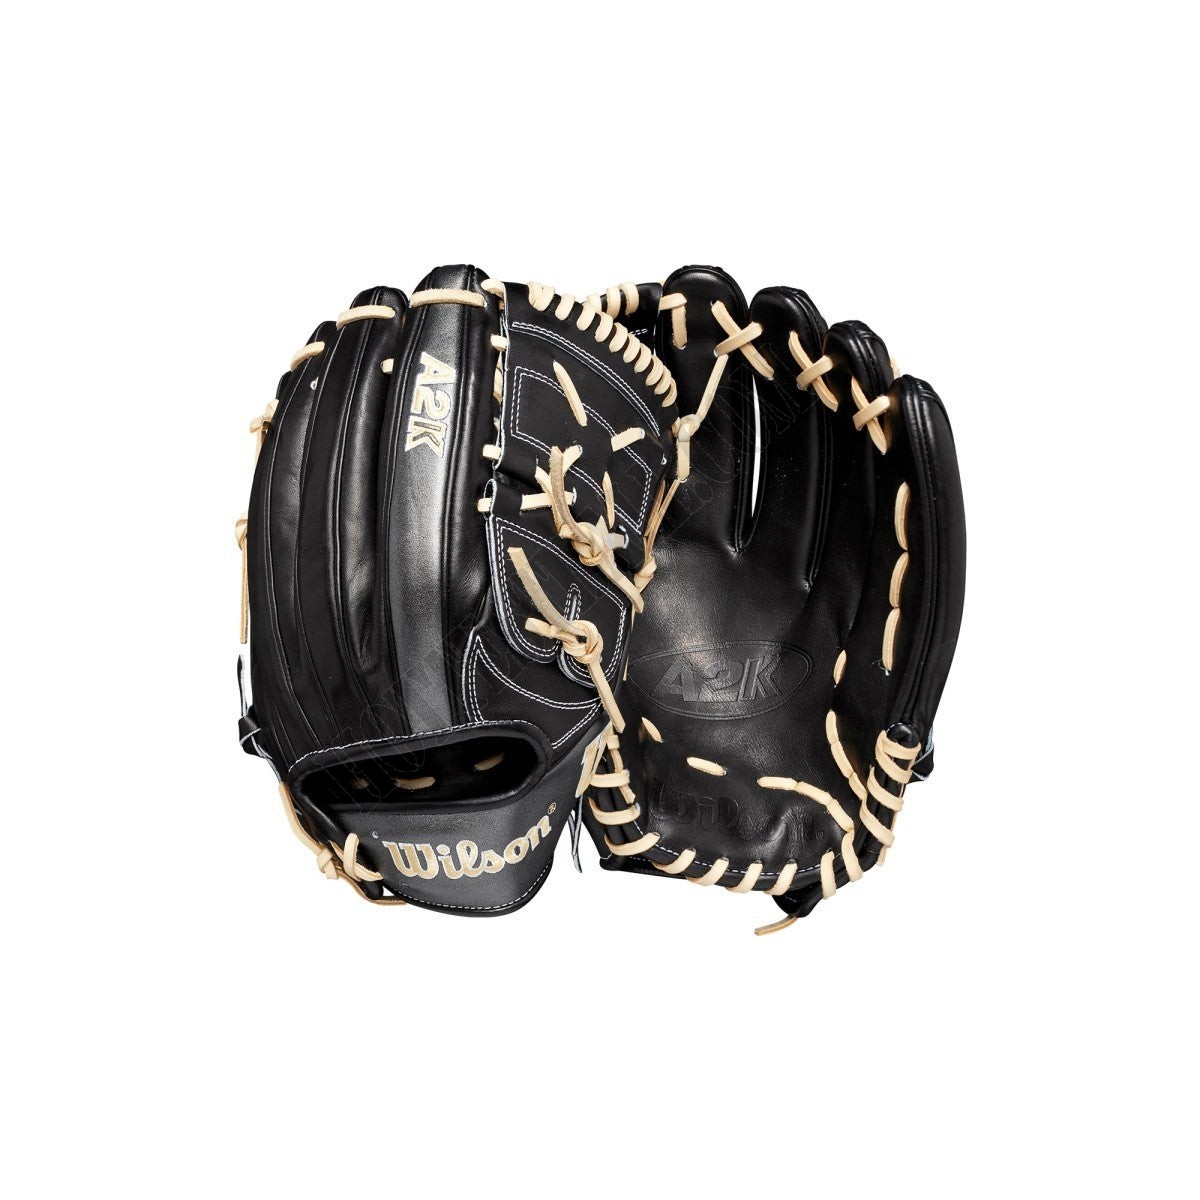 2022 A2K B2 12" Pitcher's Baseball Glove ● Wilson Promotions - -0